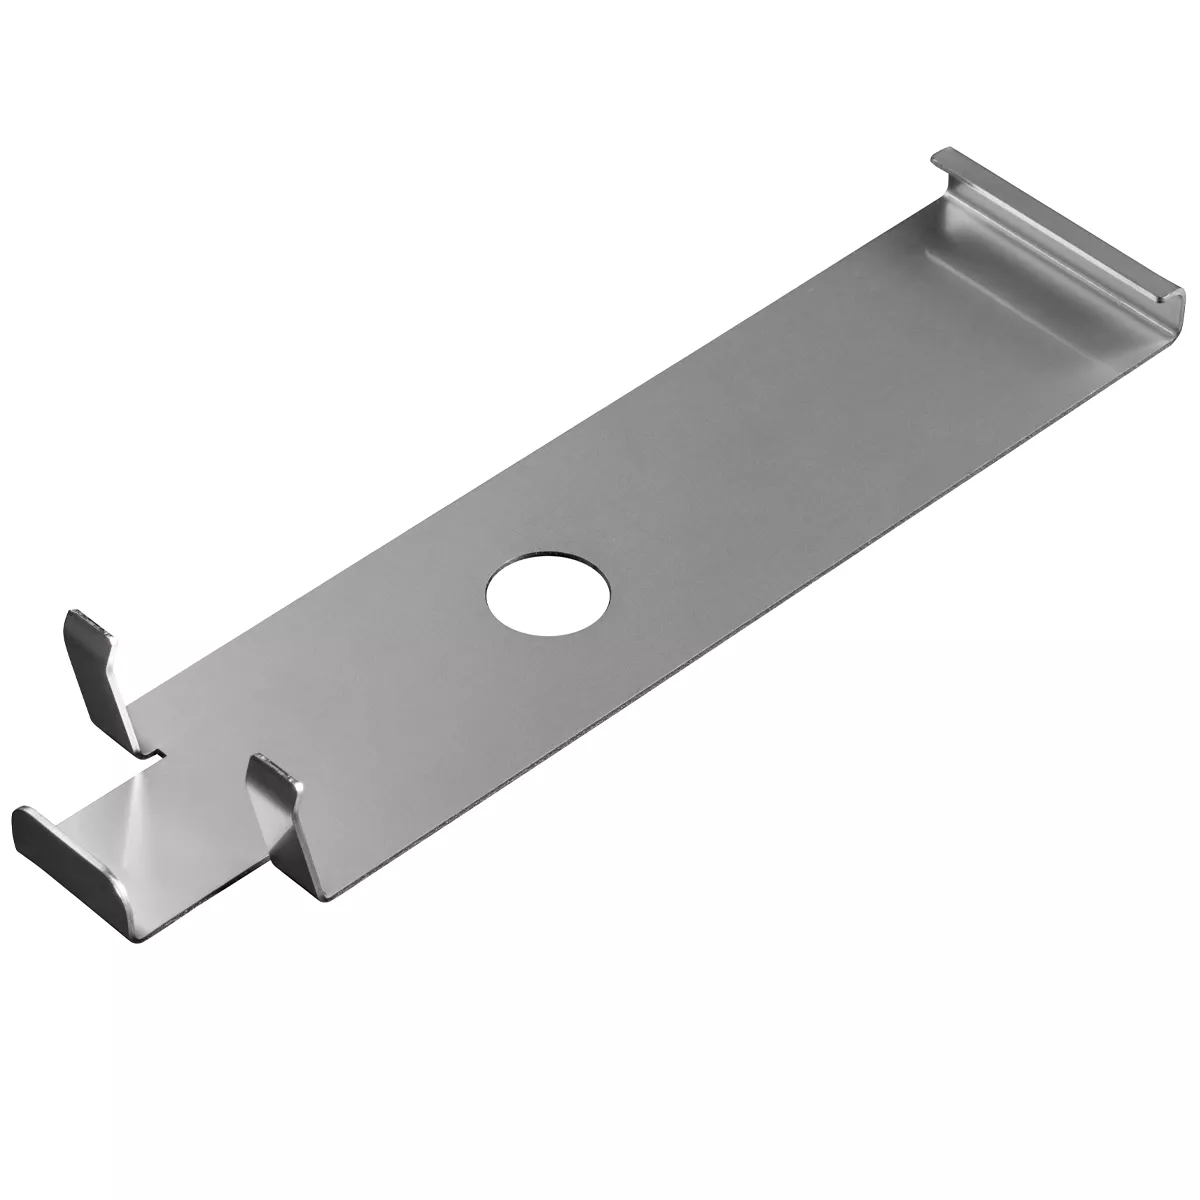 Vertical head edge clamp for aluminum rail